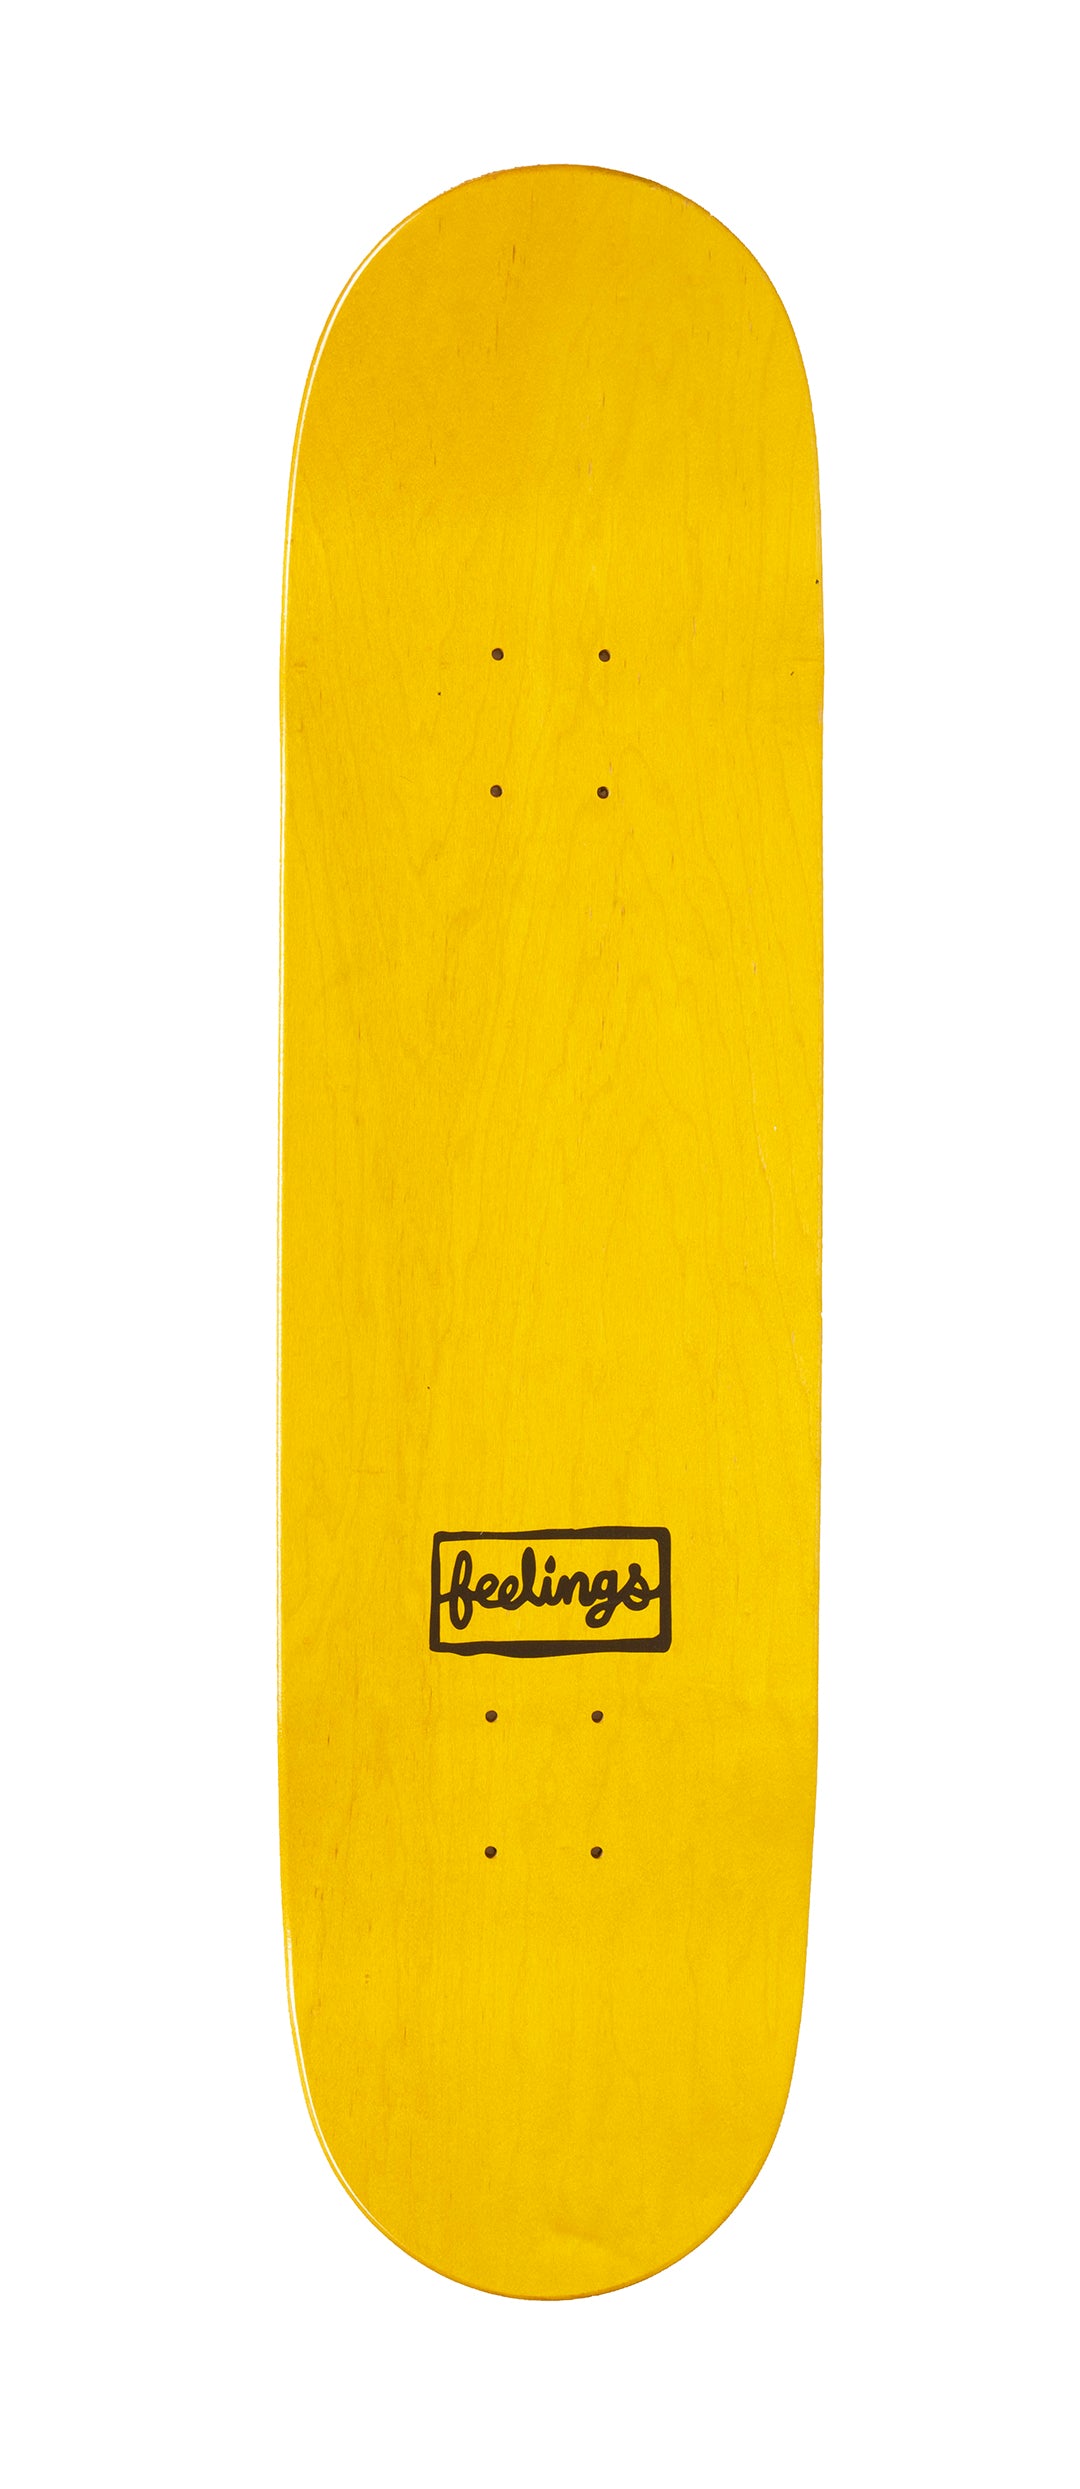 In Hand Skateboard Deck 8,5